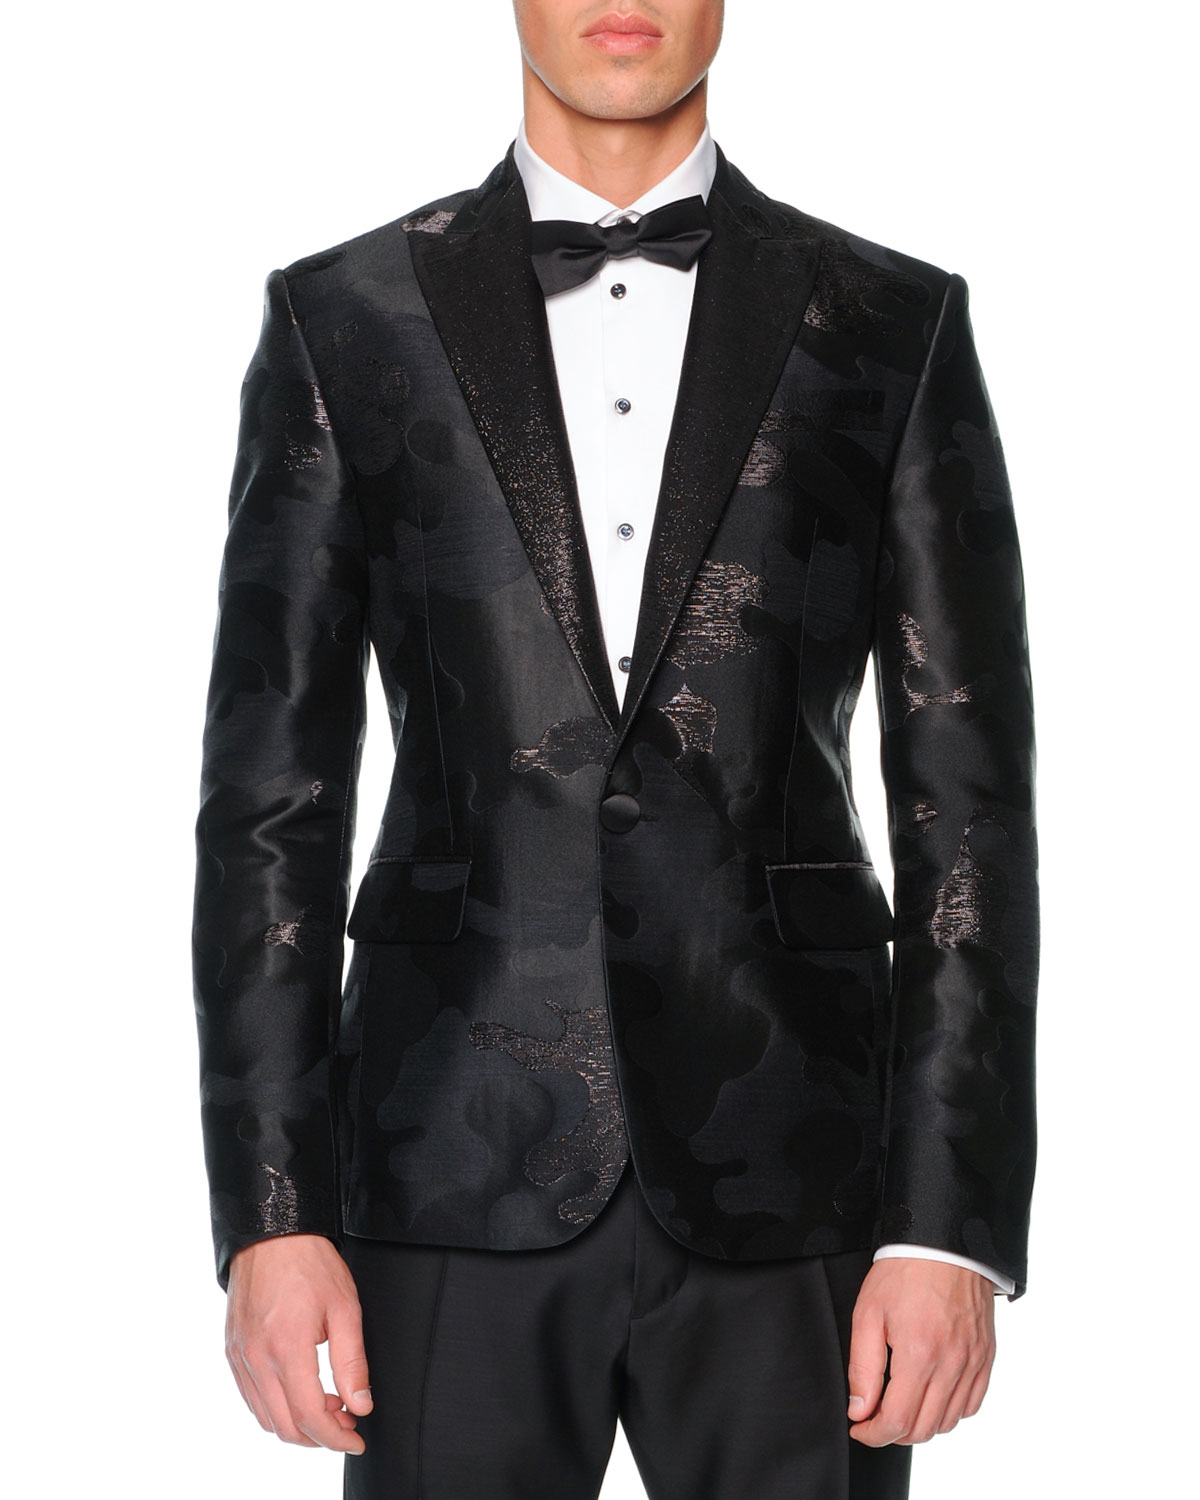 Dsquared² Beverly Hills Camo-Jacquard Tuxedo Jacket in Black for Men ...